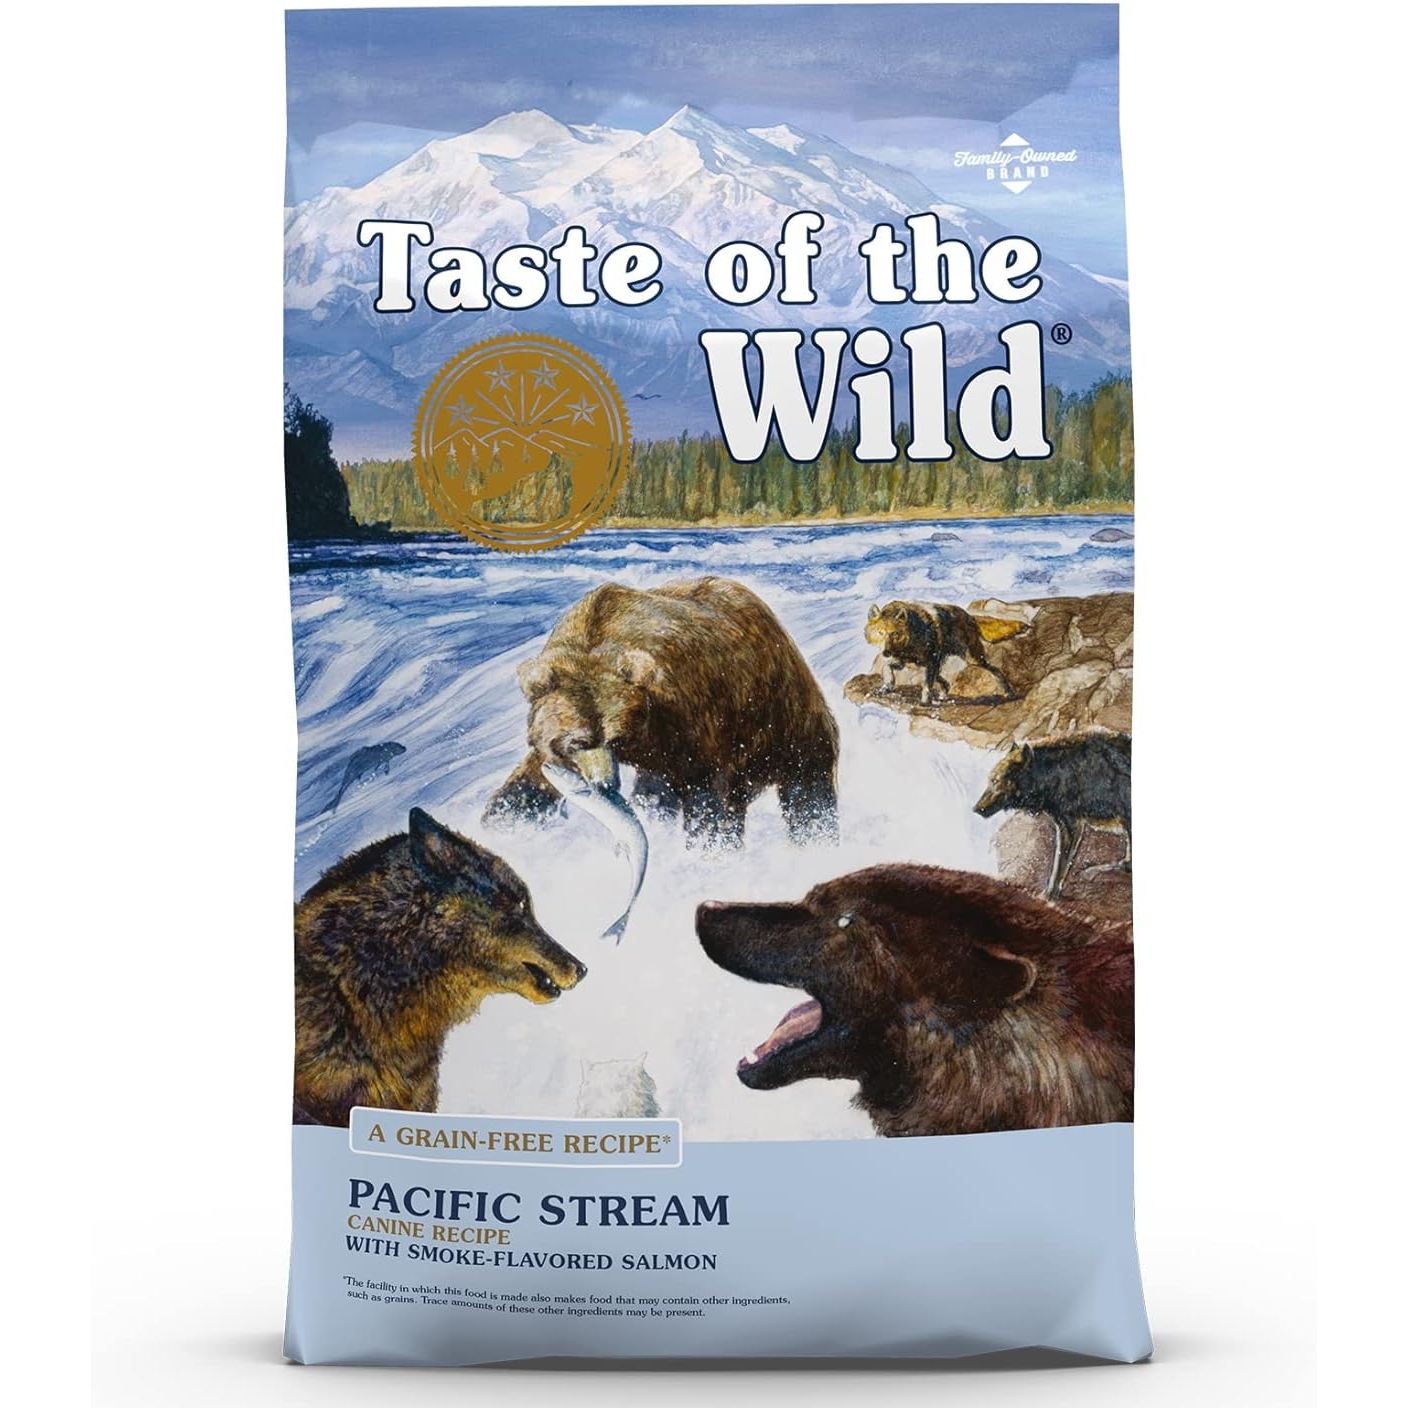 Taste of the Wild Pacific Stream Smoke-Flavored Salmon Puppy Recipe Grain-Free Dry Dog Food